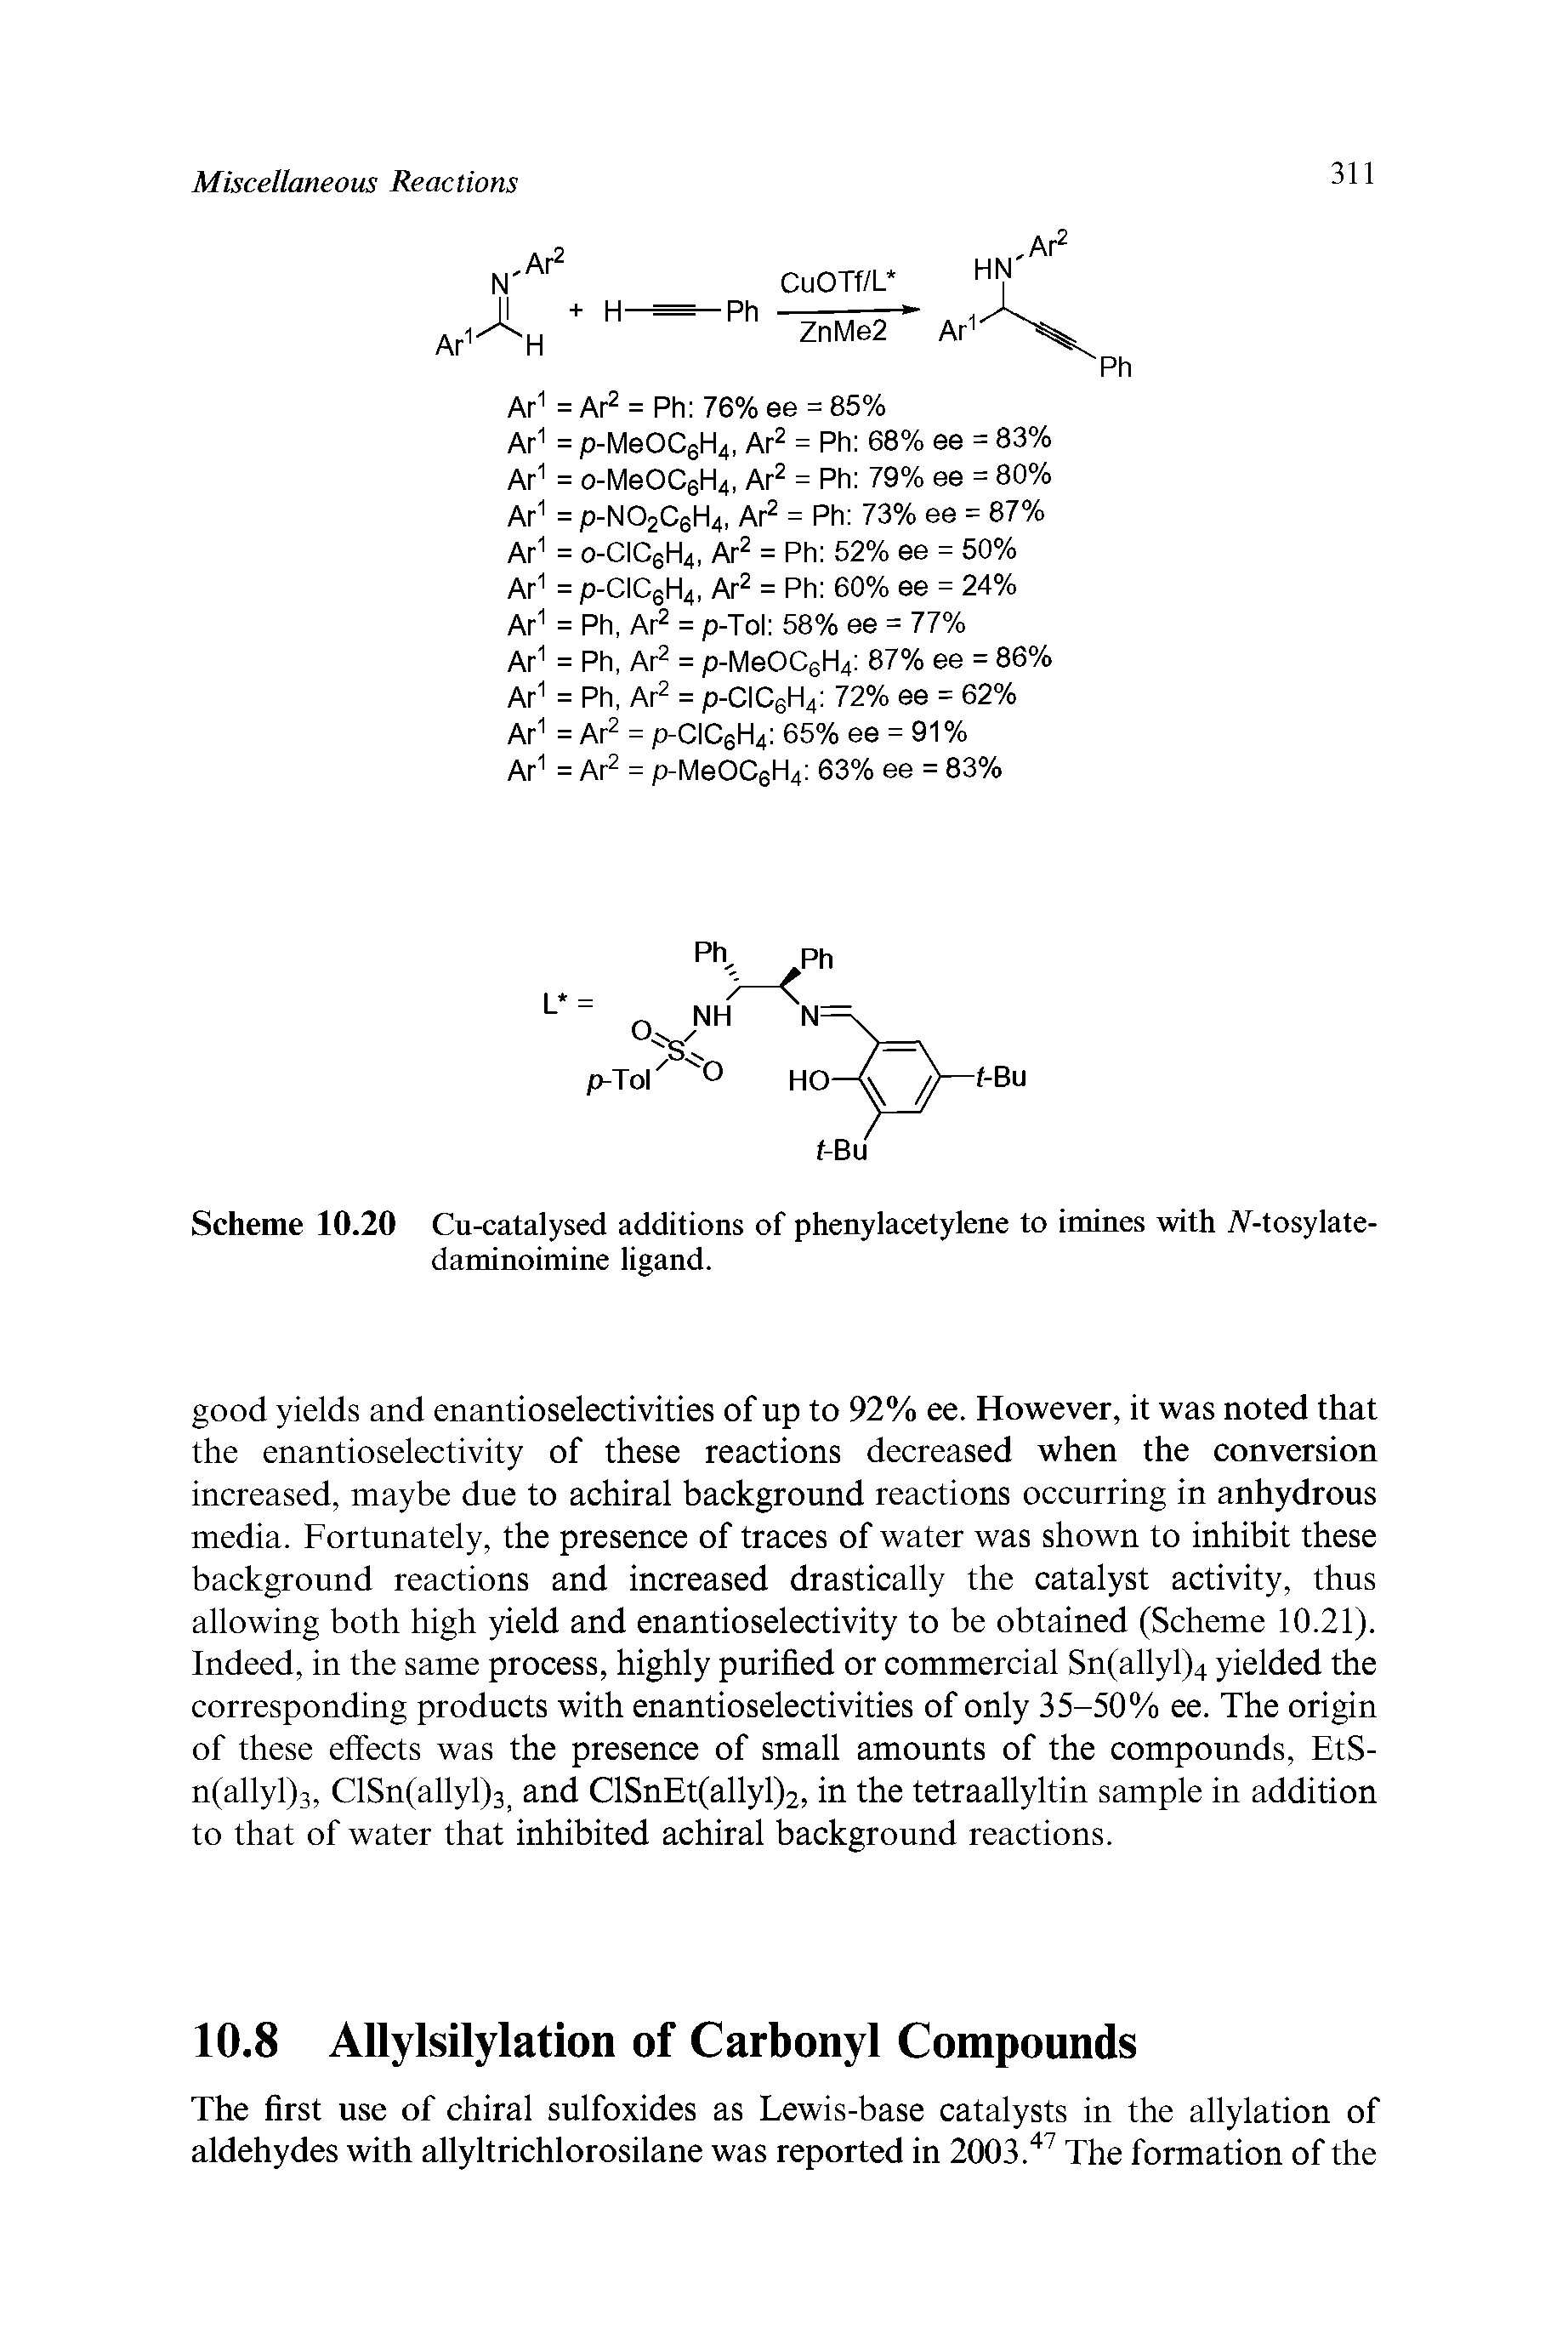 Scheme 10.20 Cu-catalysed additions of phenylacetylene to imines with 7V-tosylate-daminoimine ligand.